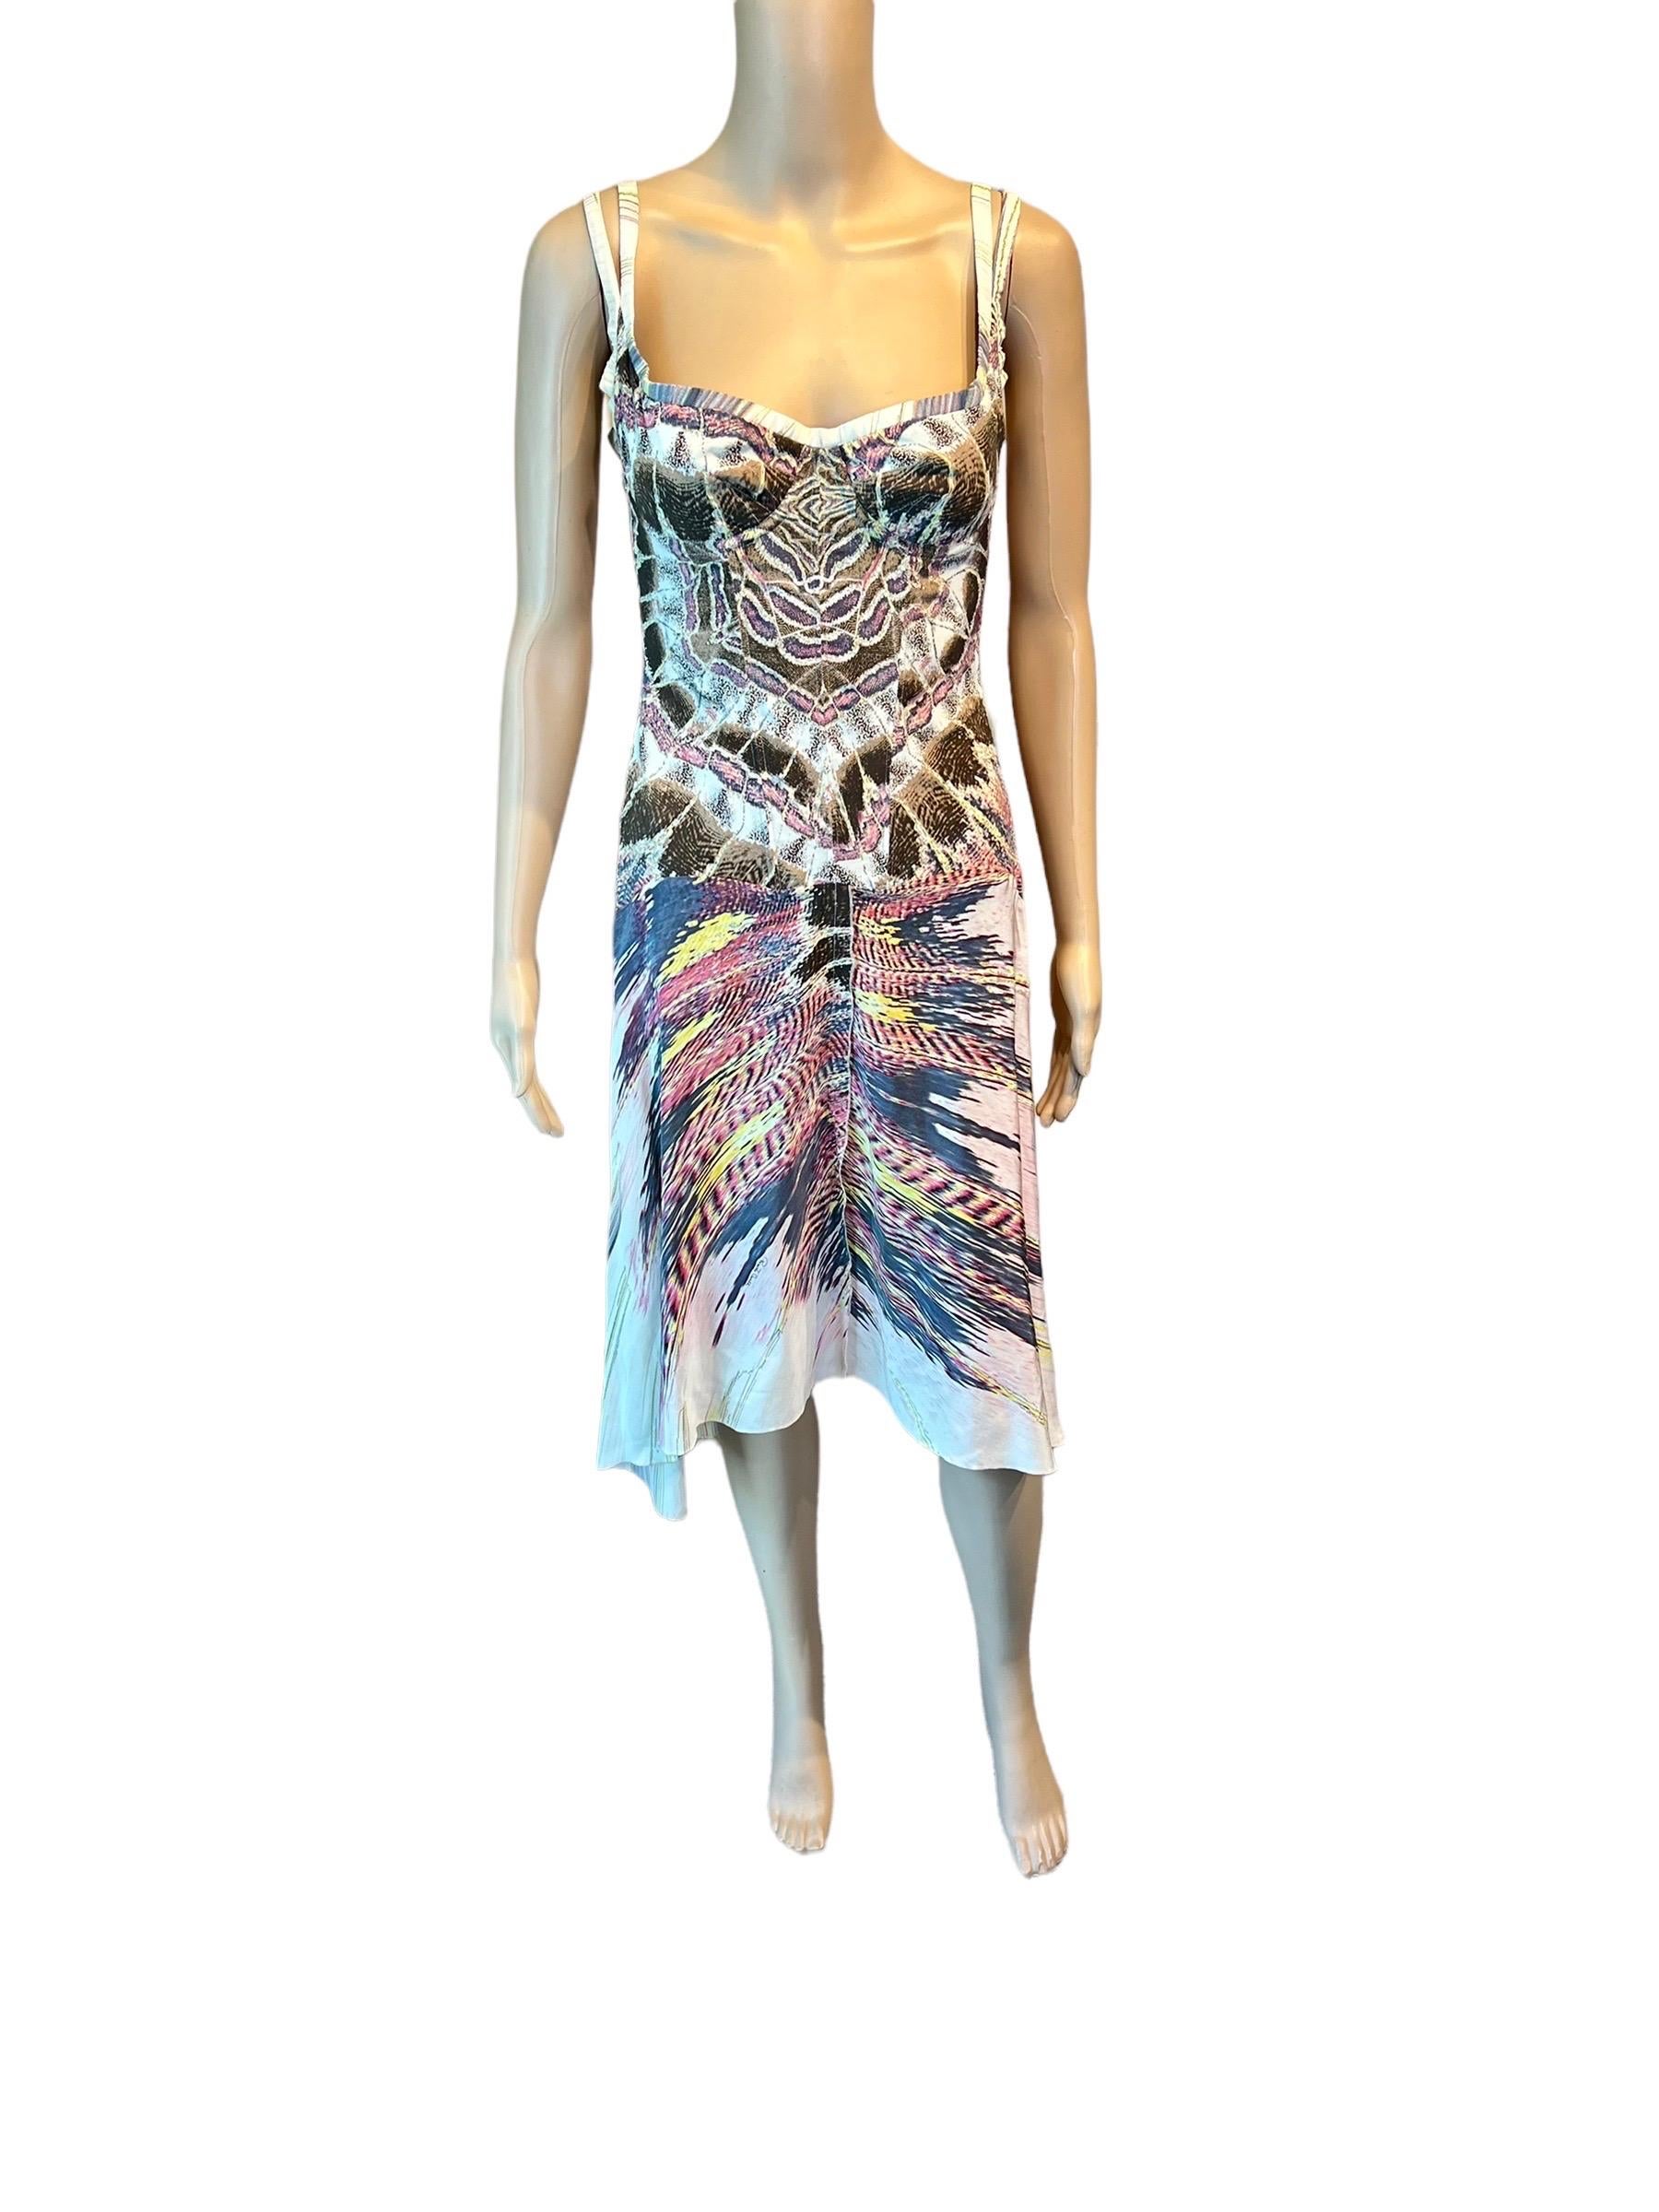 Roberto Cavalli S/S 2004 Bustier Corset Plunging Neckline Feather Print Dress For Sale 1